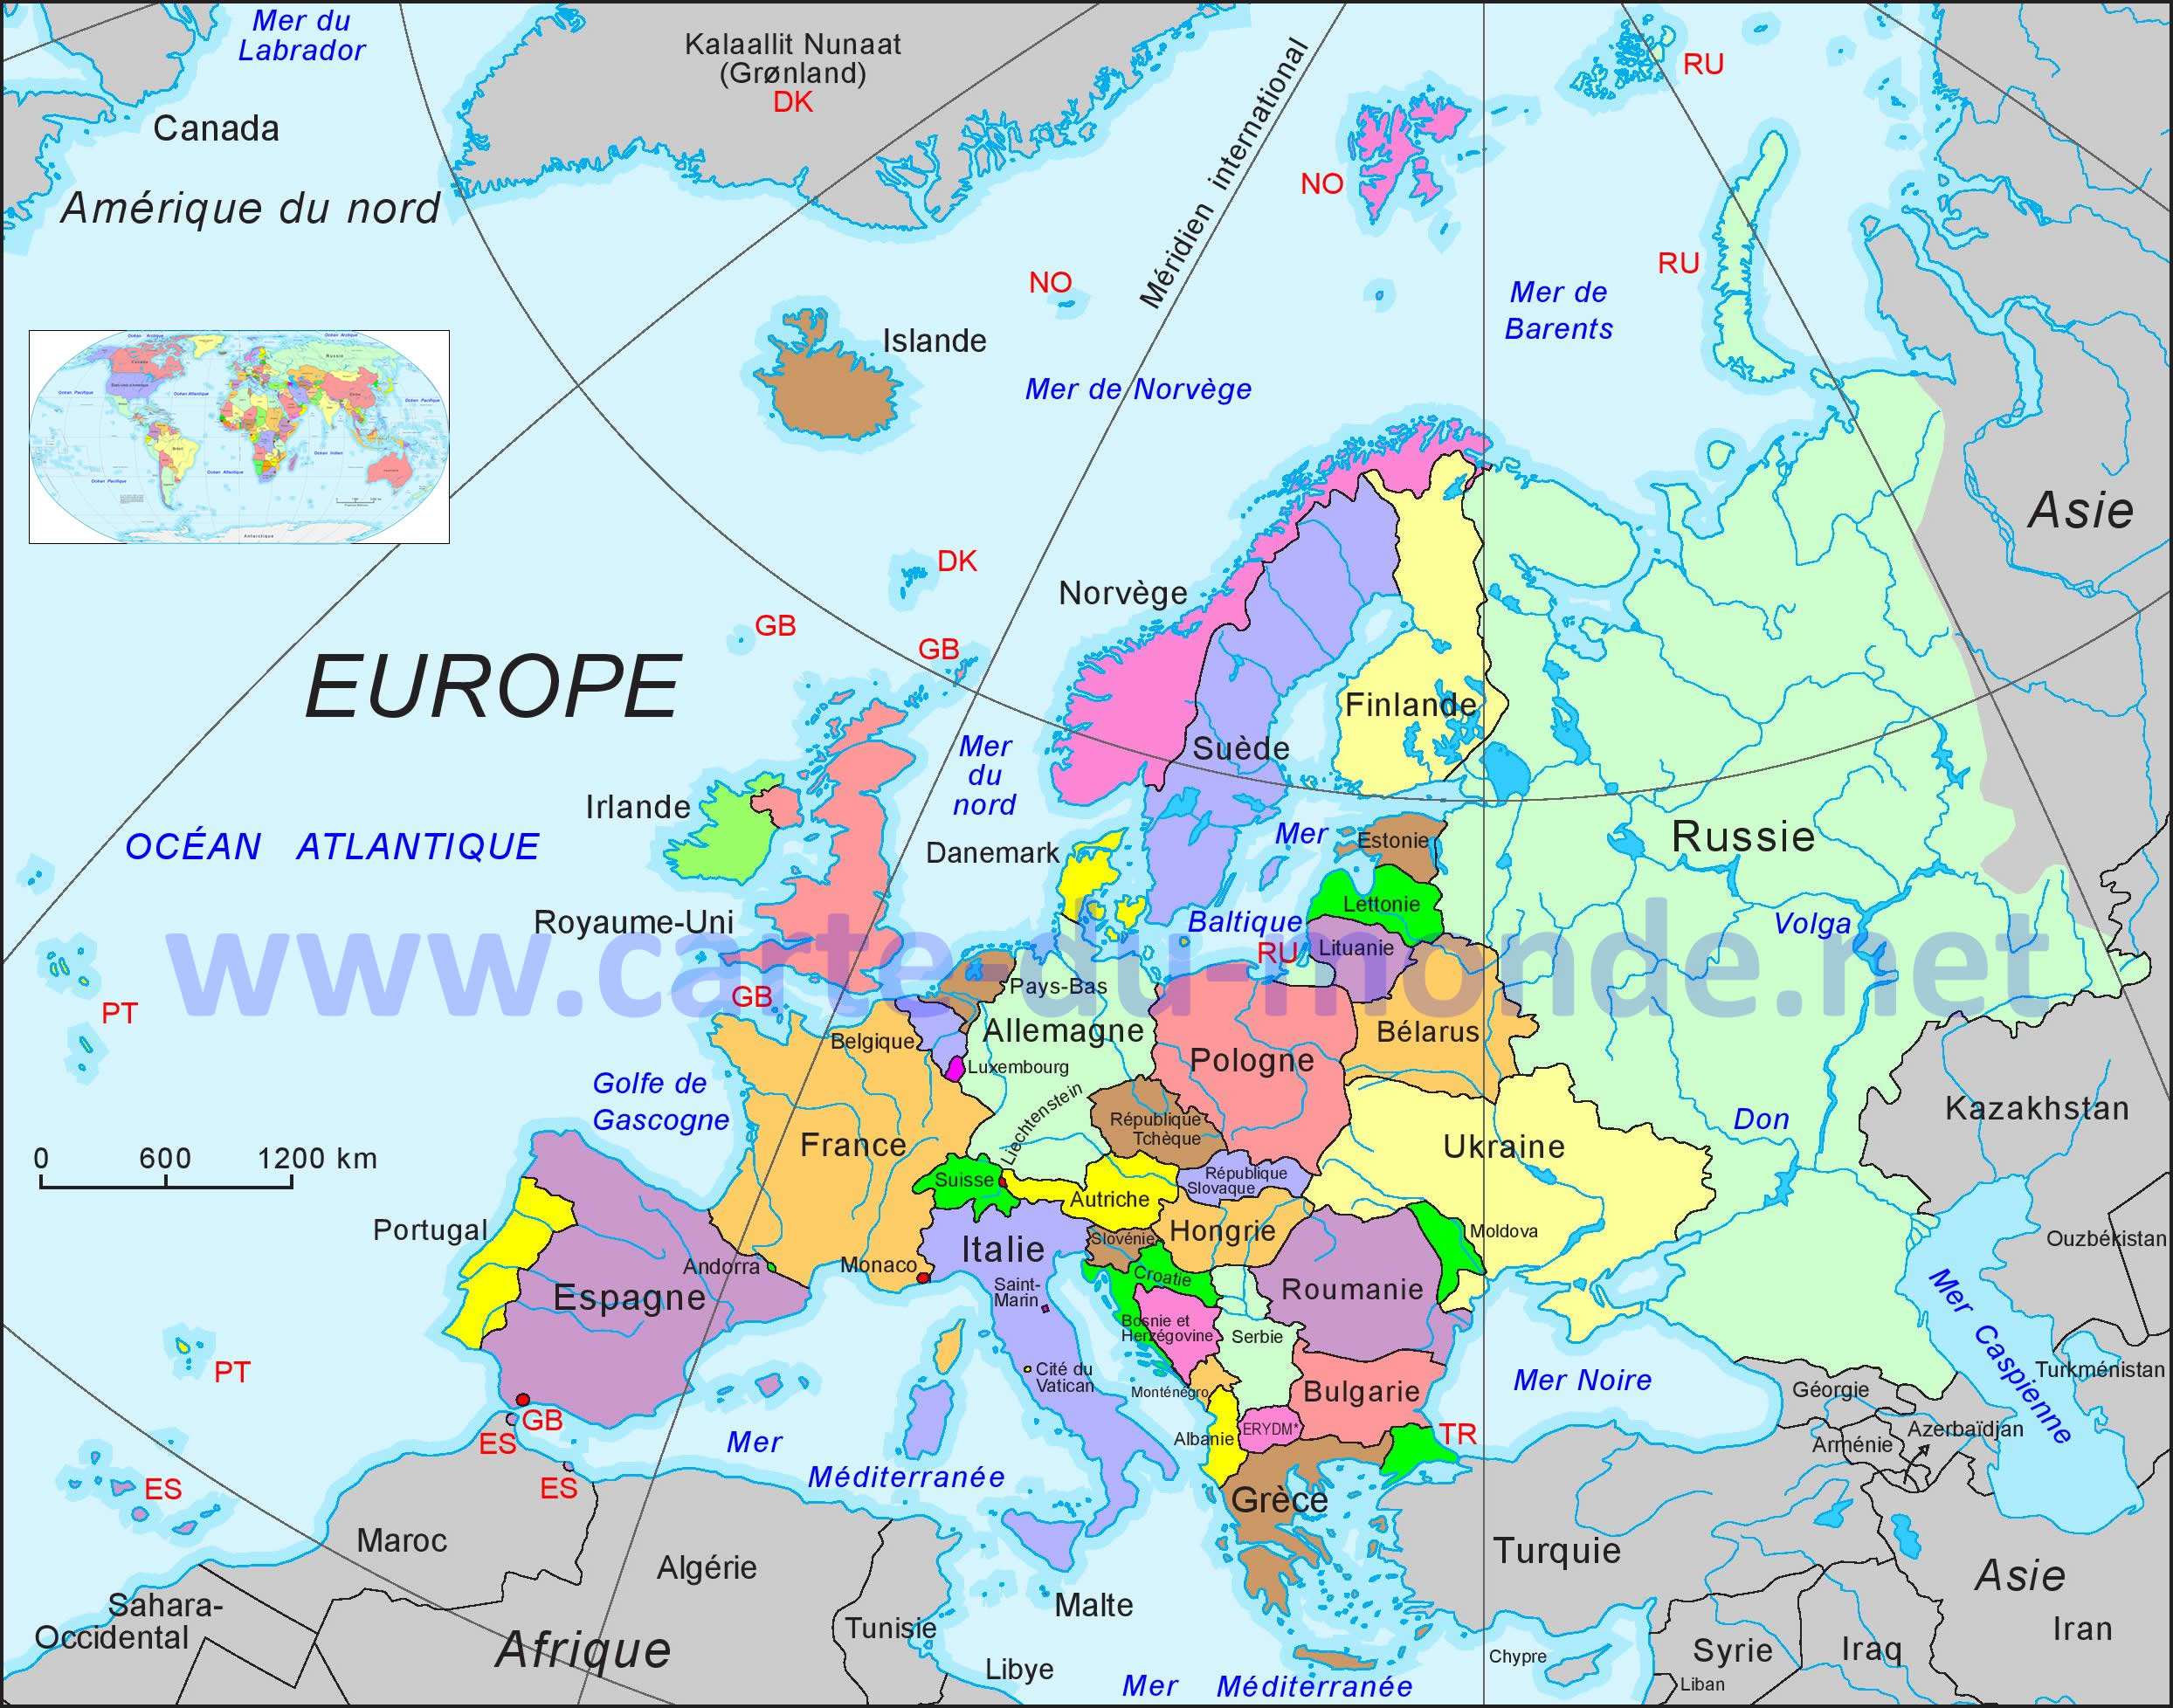 slovenie carte europe - Image